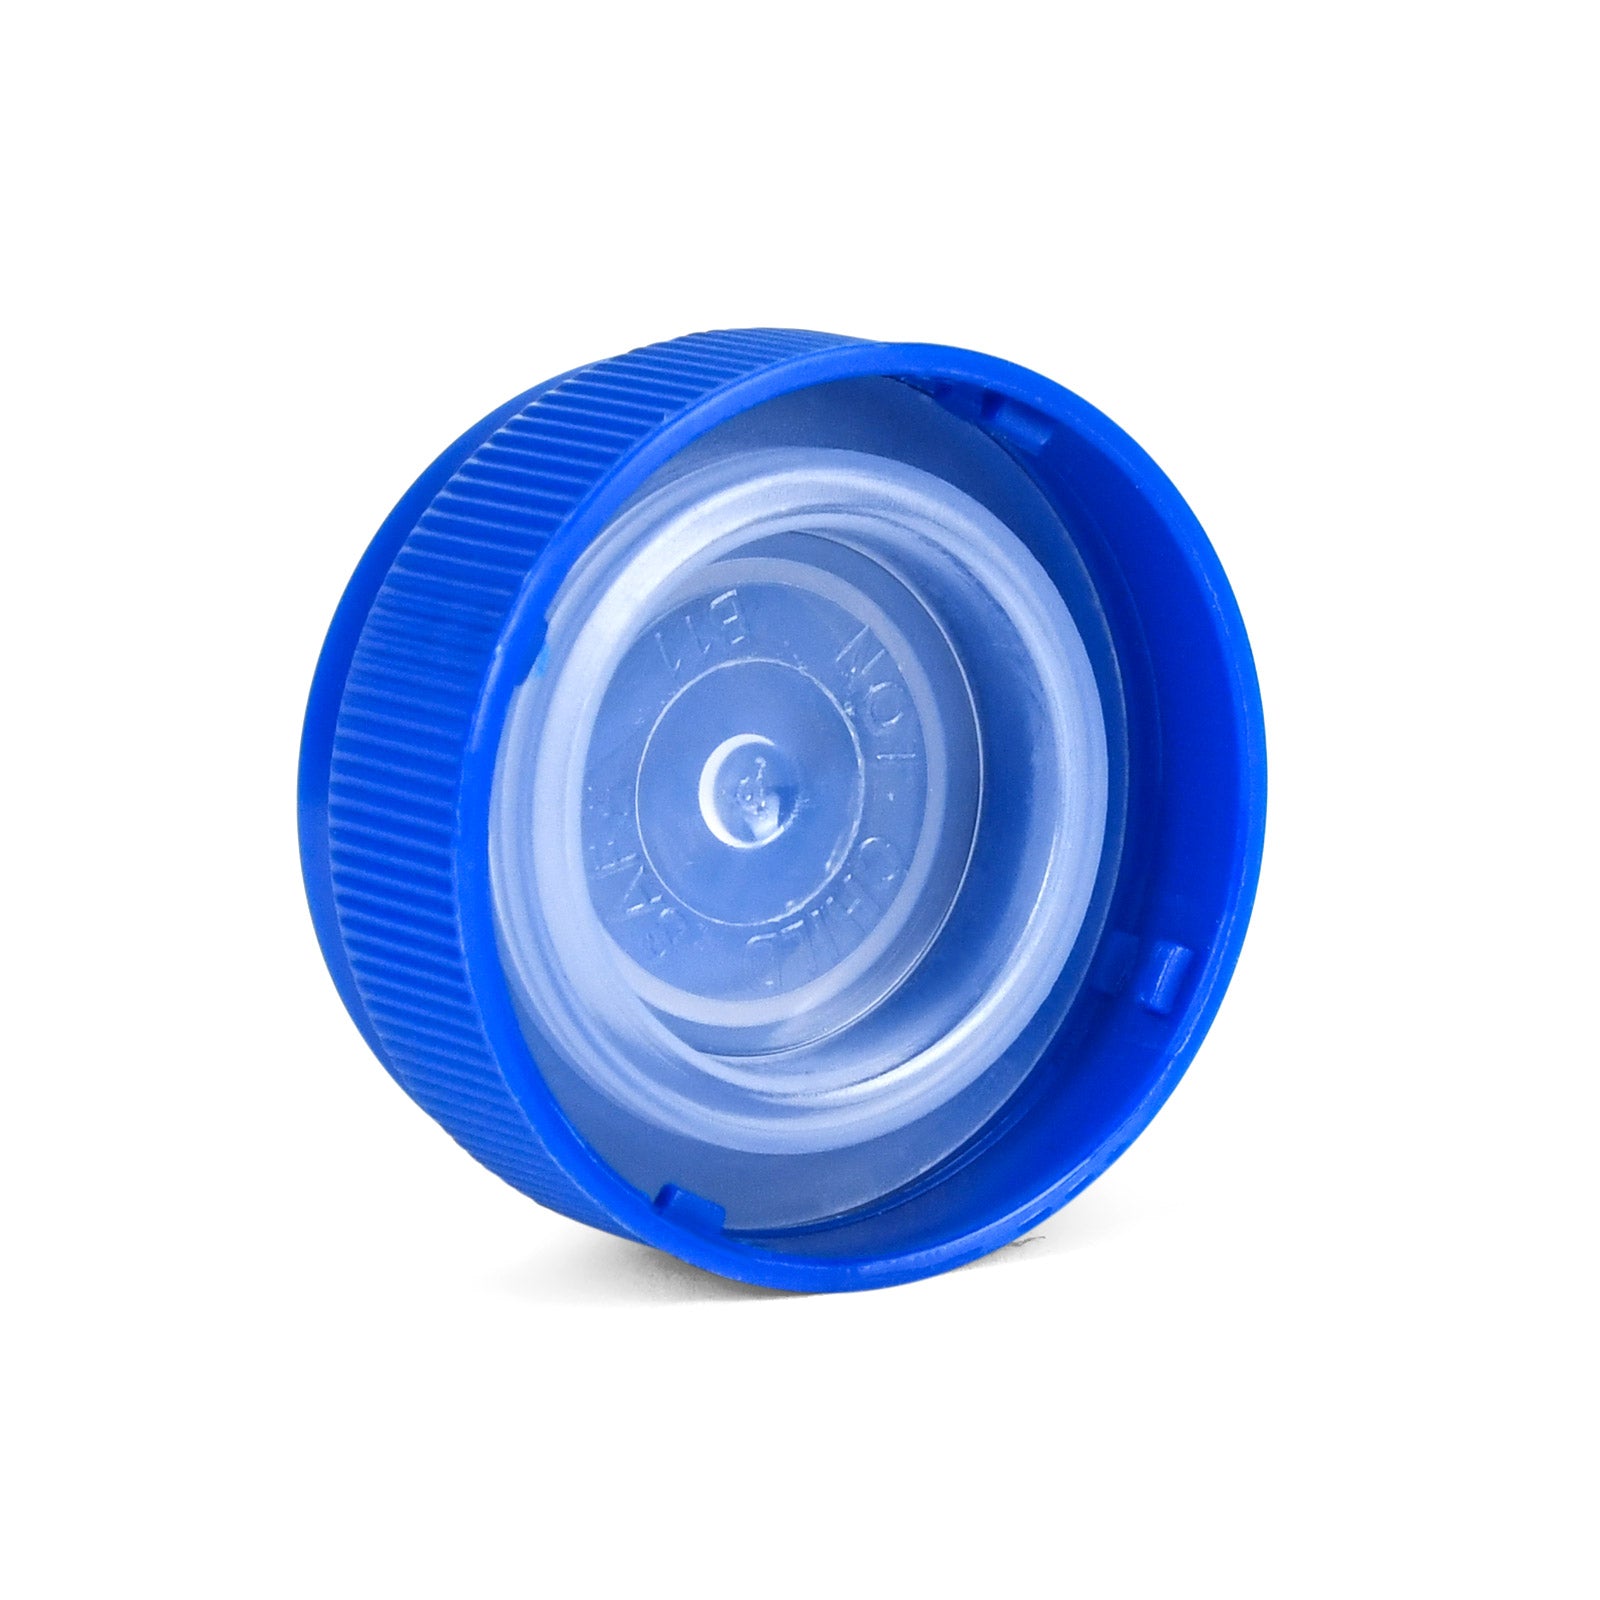 13 Dram Reversible Cap Opaque Blue - 1 Count